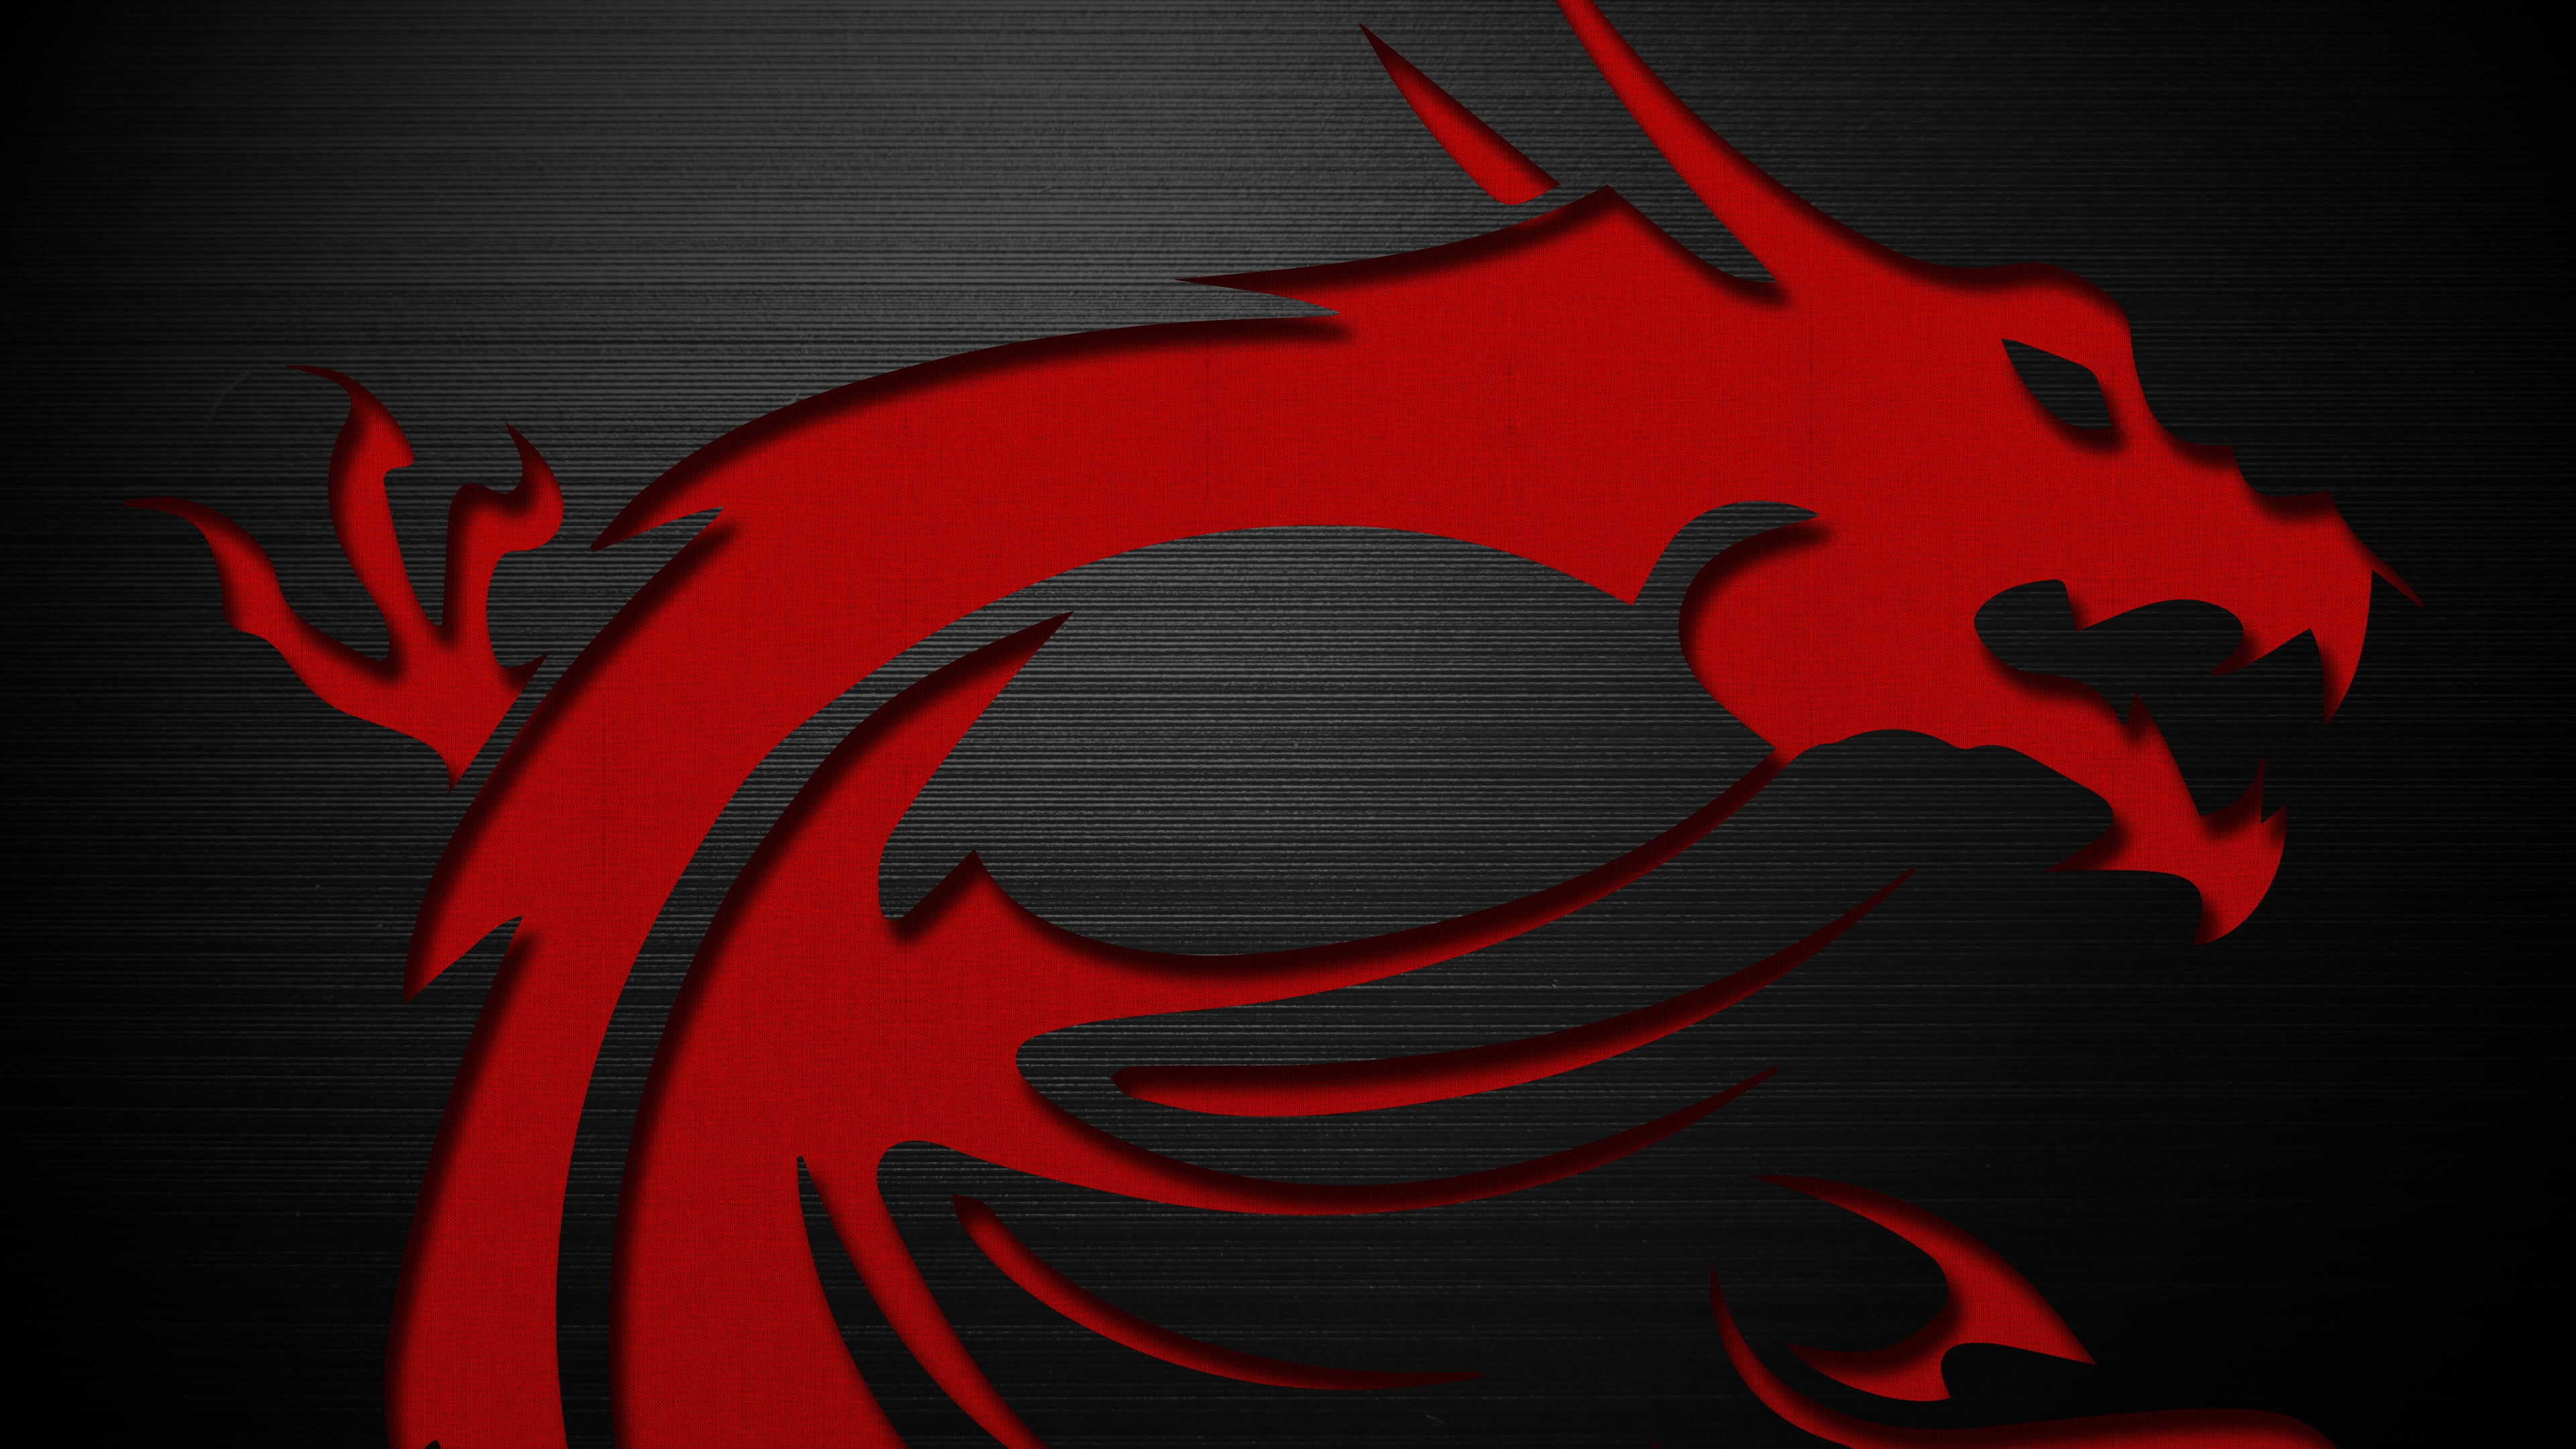 red dragon logo